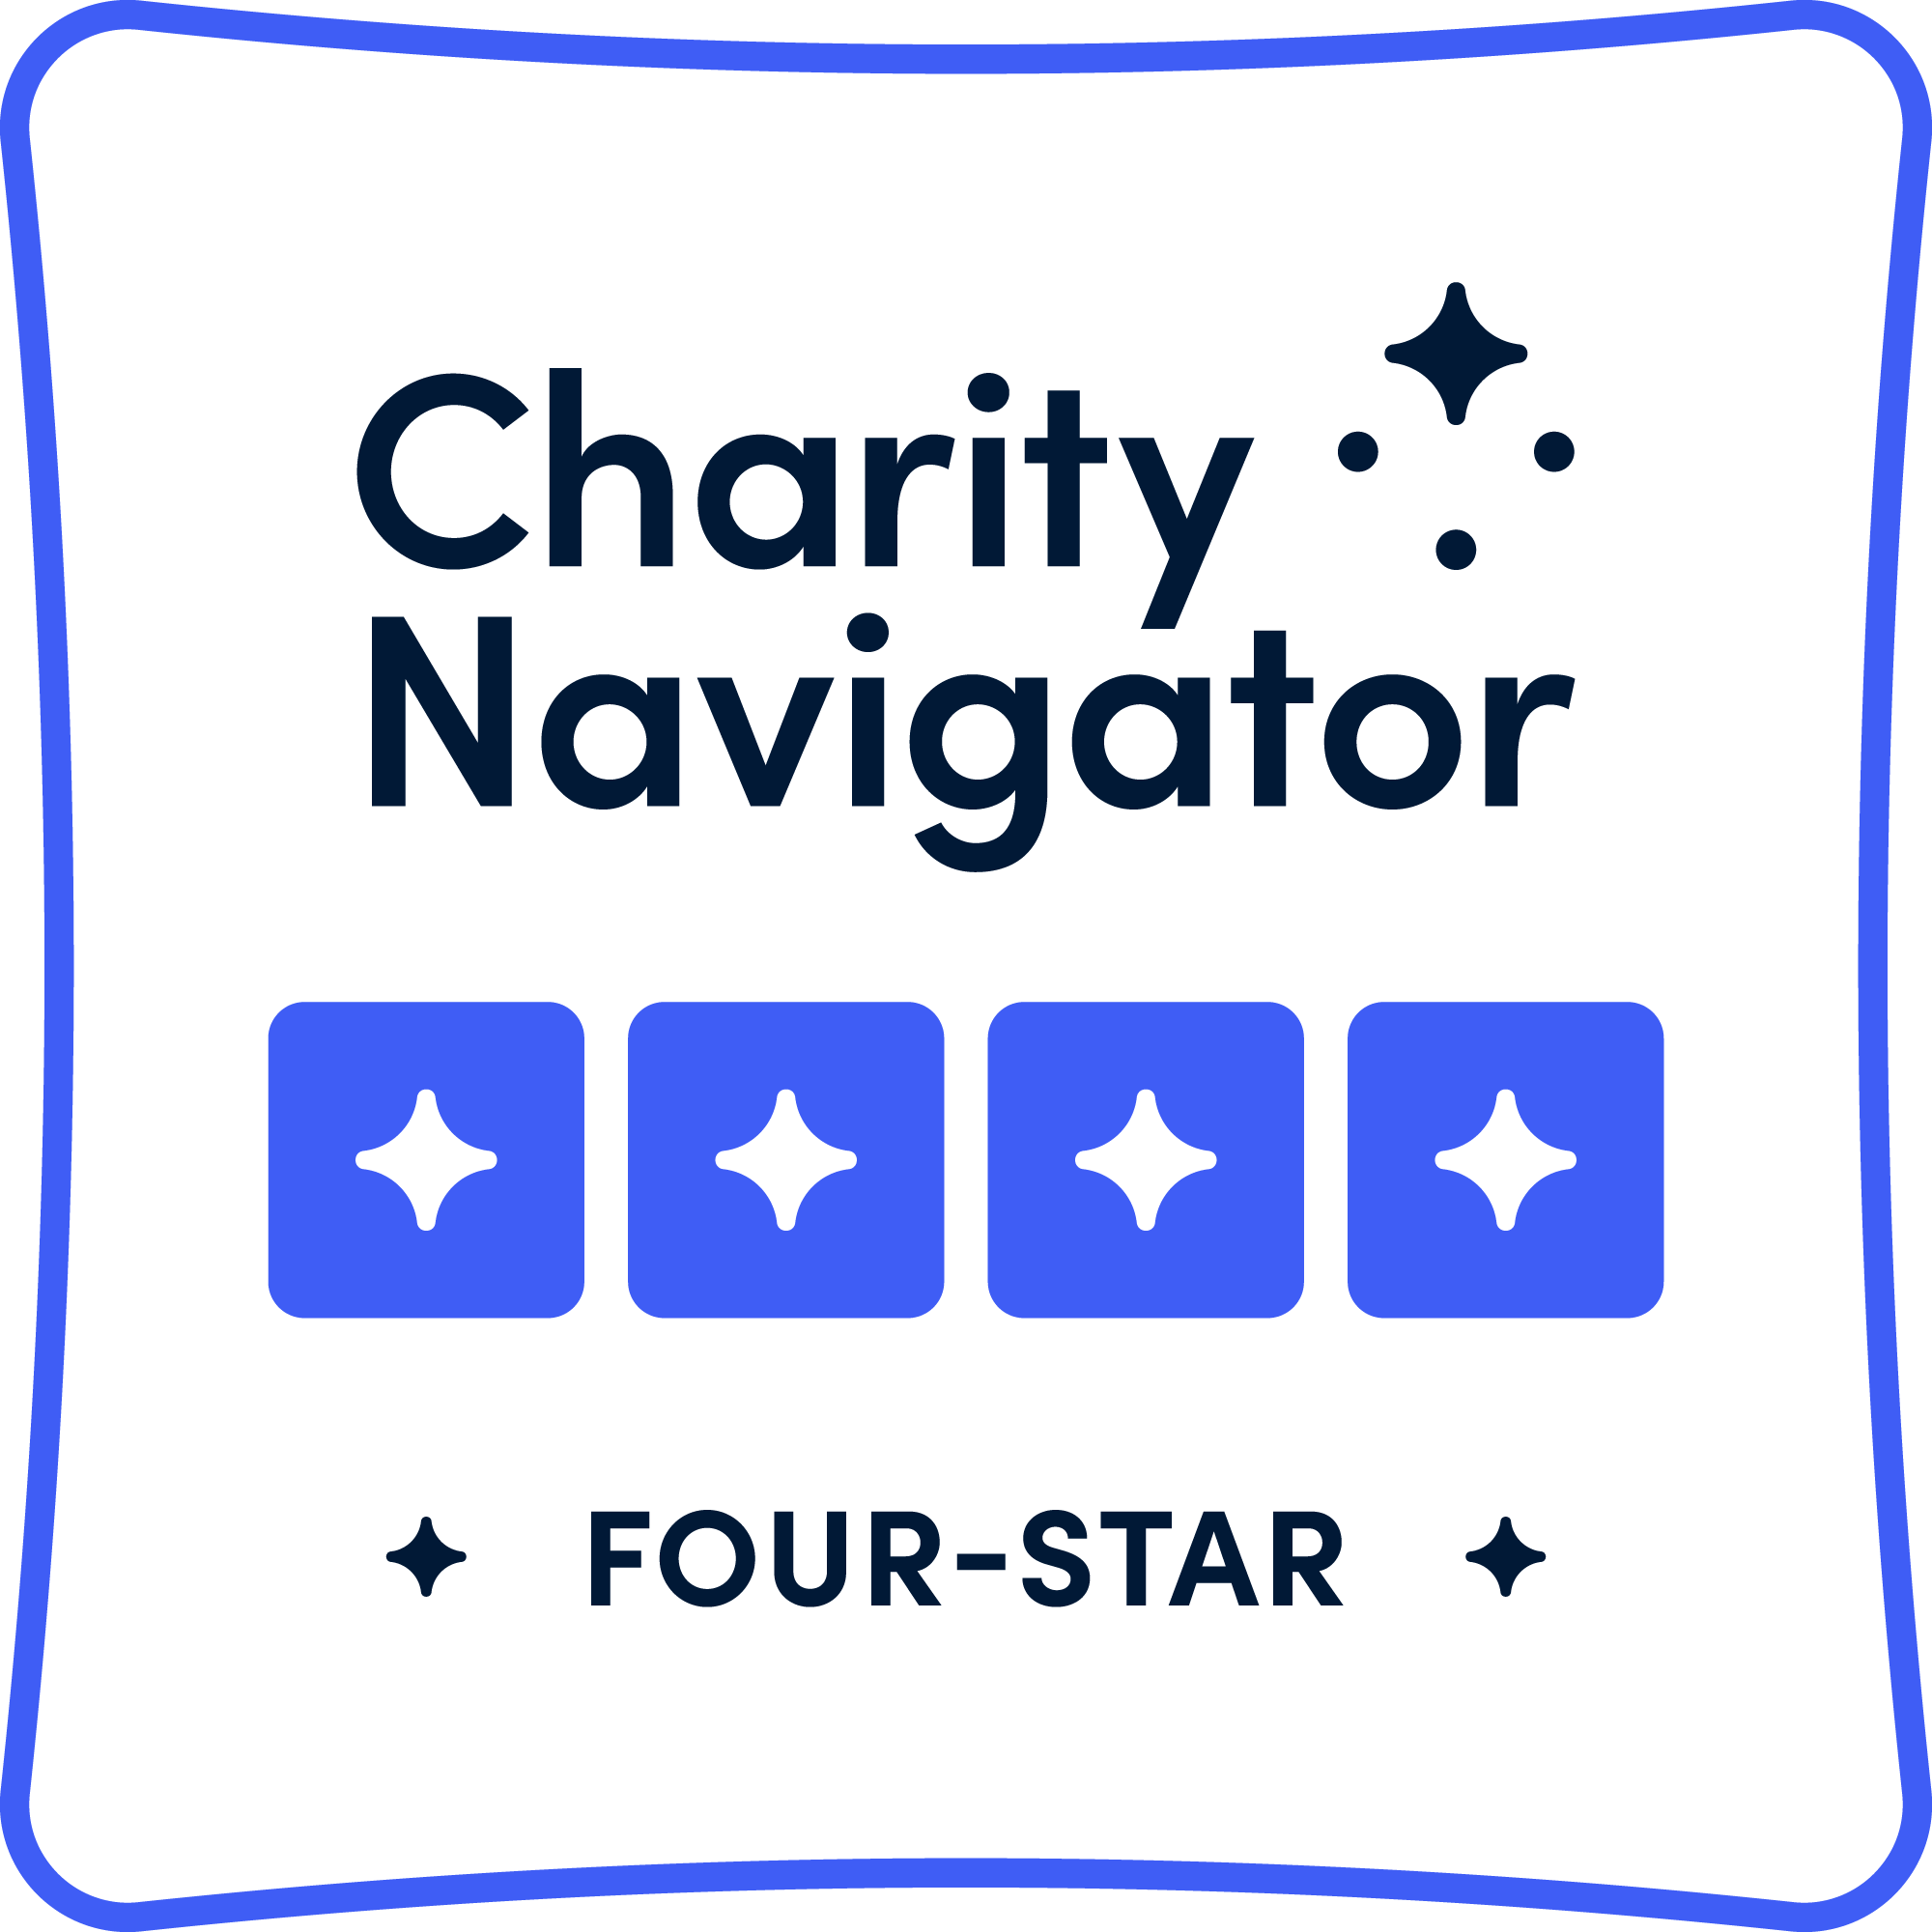 Charity Navigator 4 star charity logo.